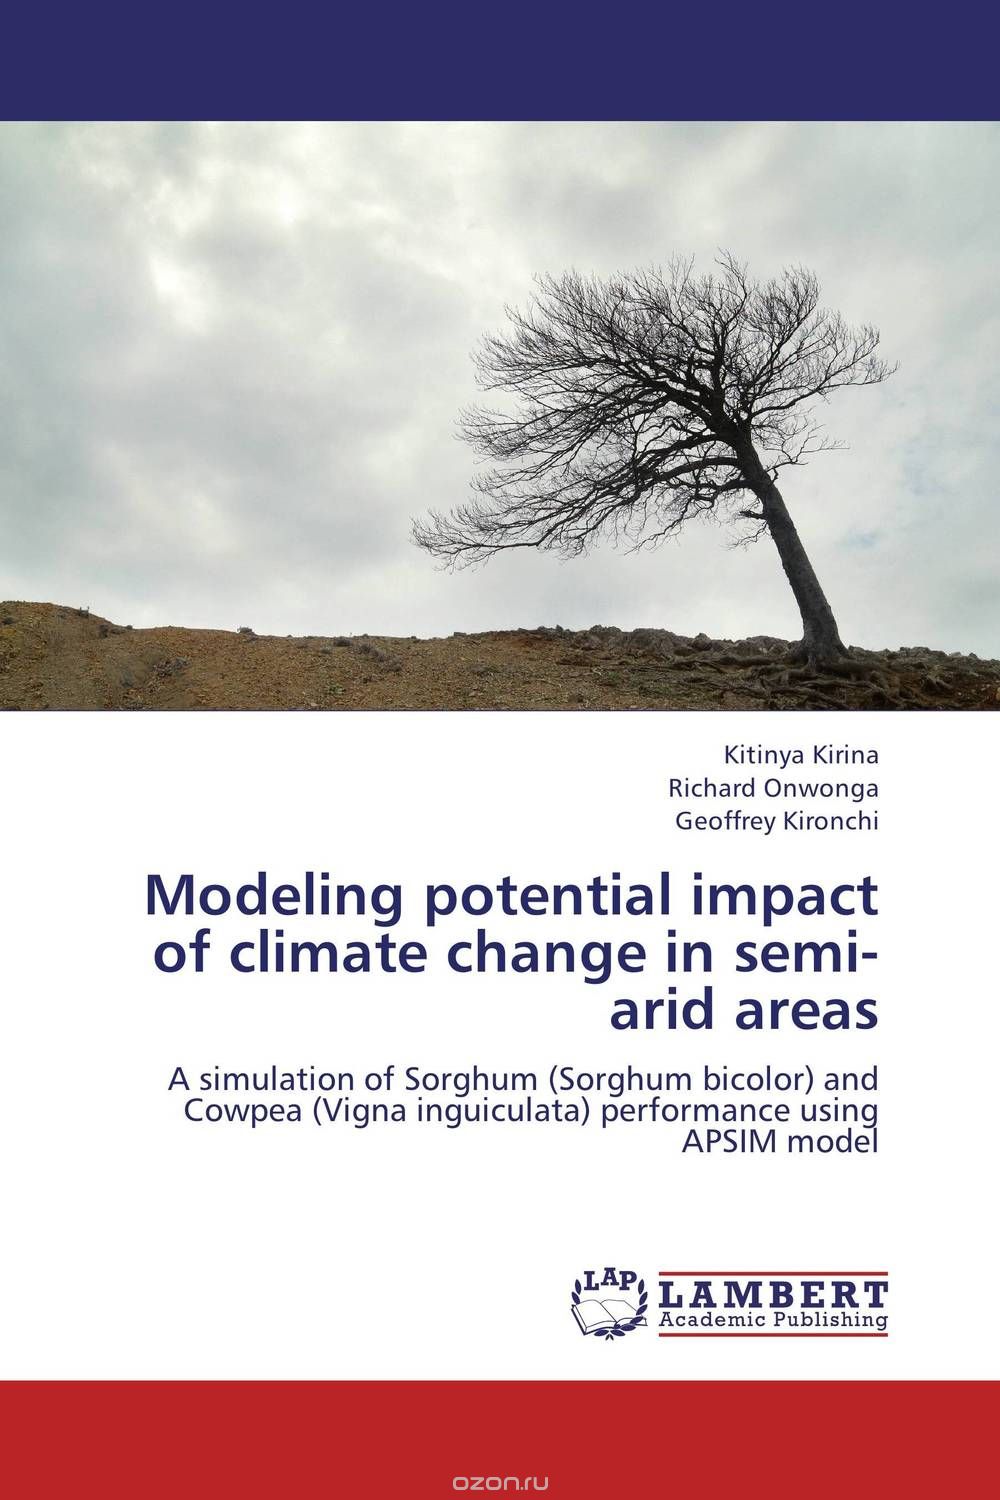 Скачать книгу "Modeling potential impact of climate change in semi-arid areas"